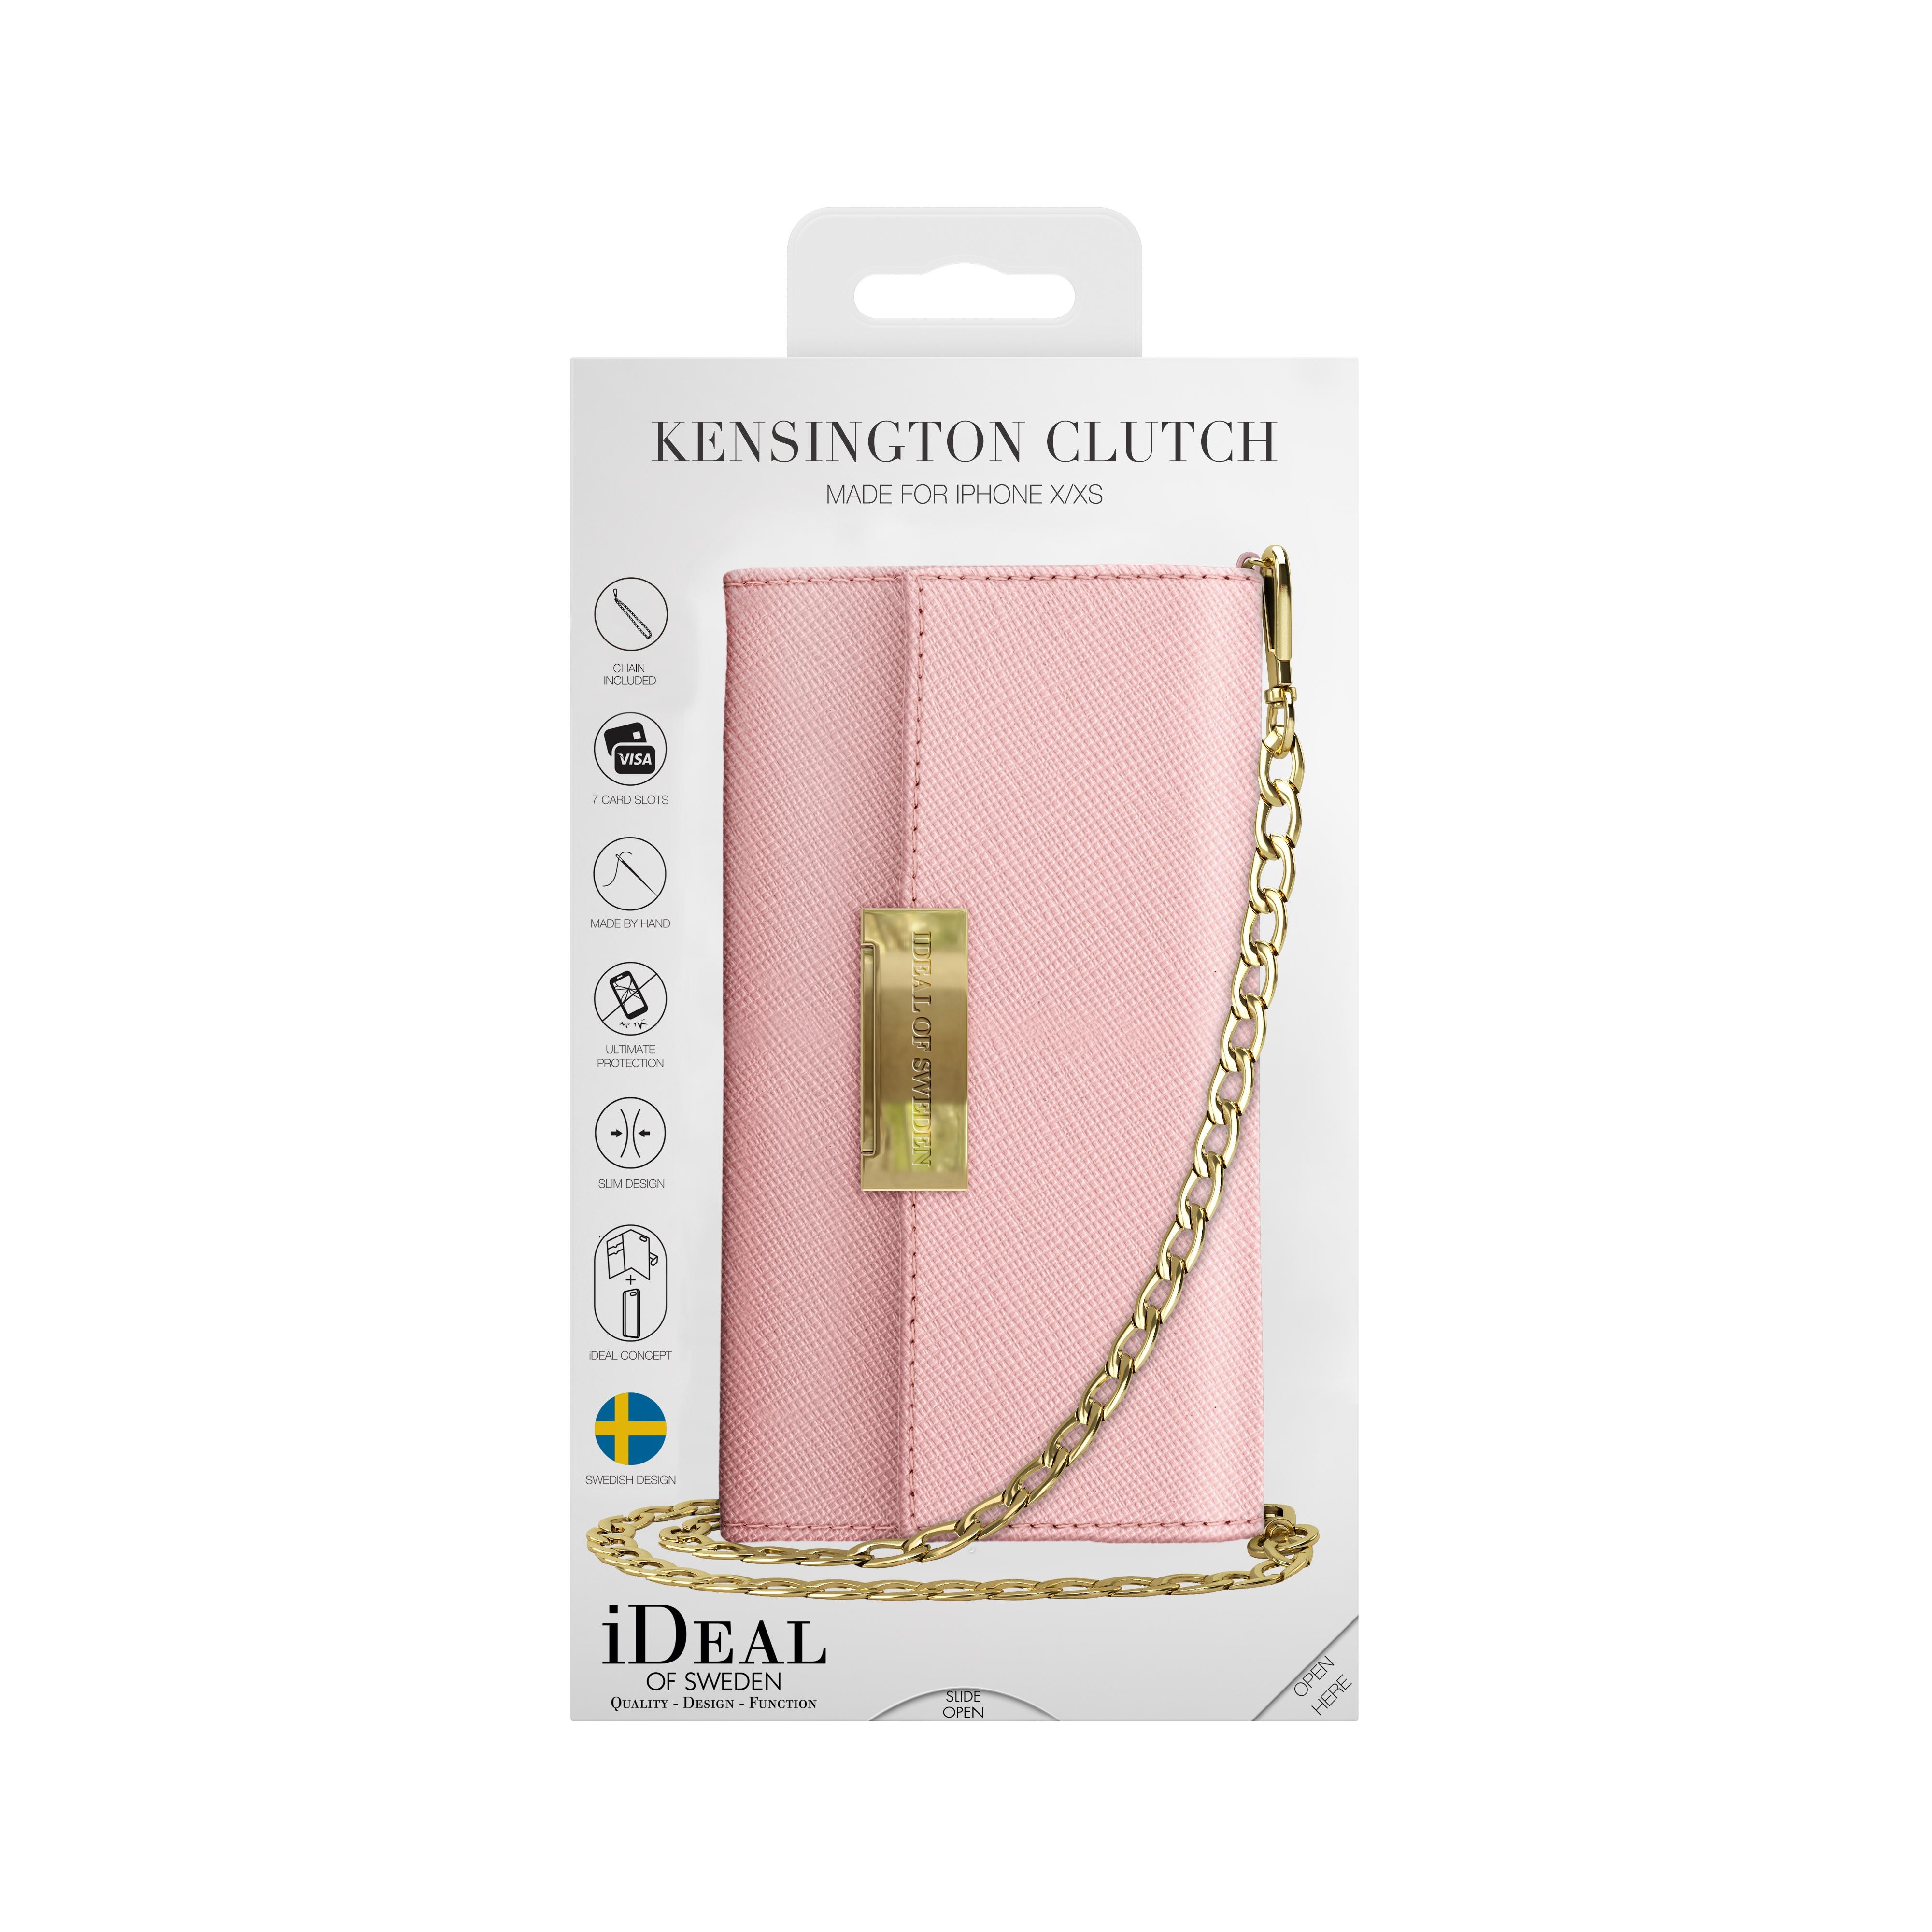 Kensington Clutch iPhone X/XS Pink